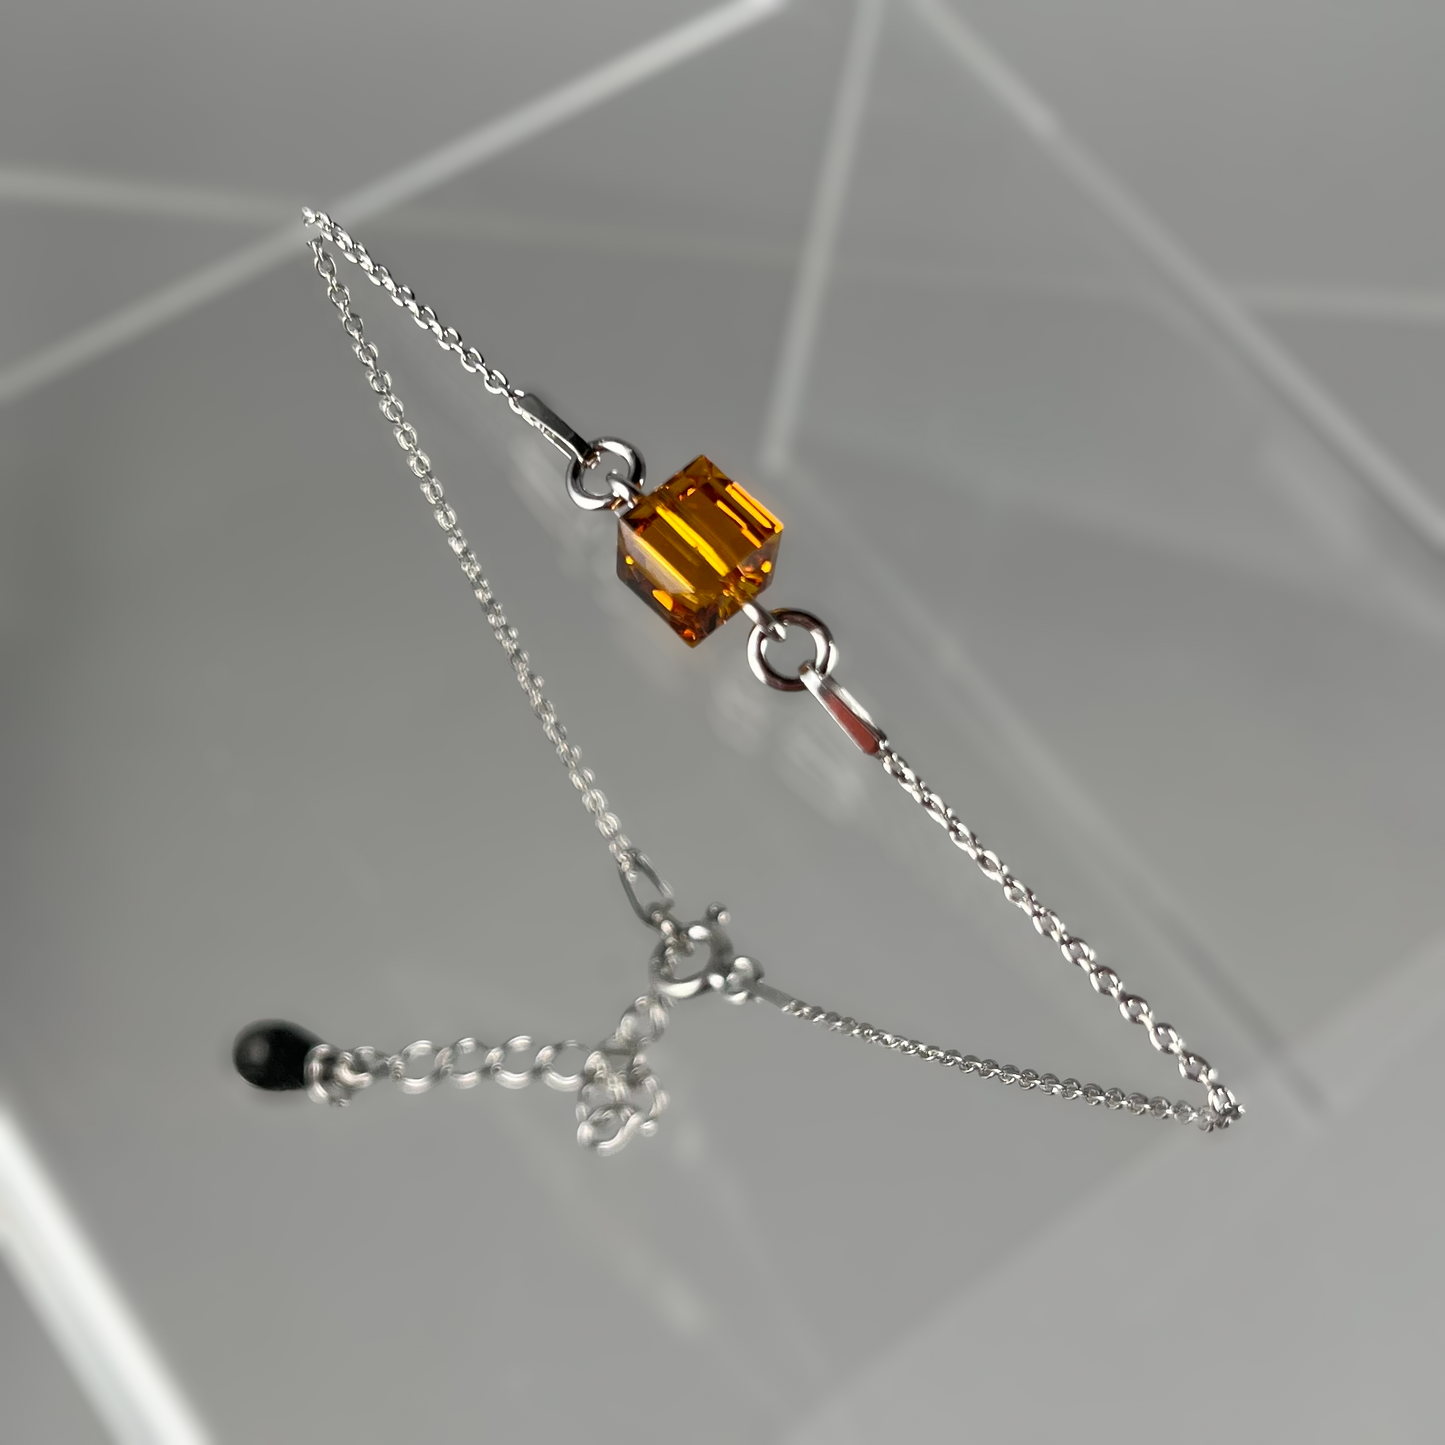 Bracelet with Swarovski crystals, Mandarin color, rhodium-plated silver, SQUARE